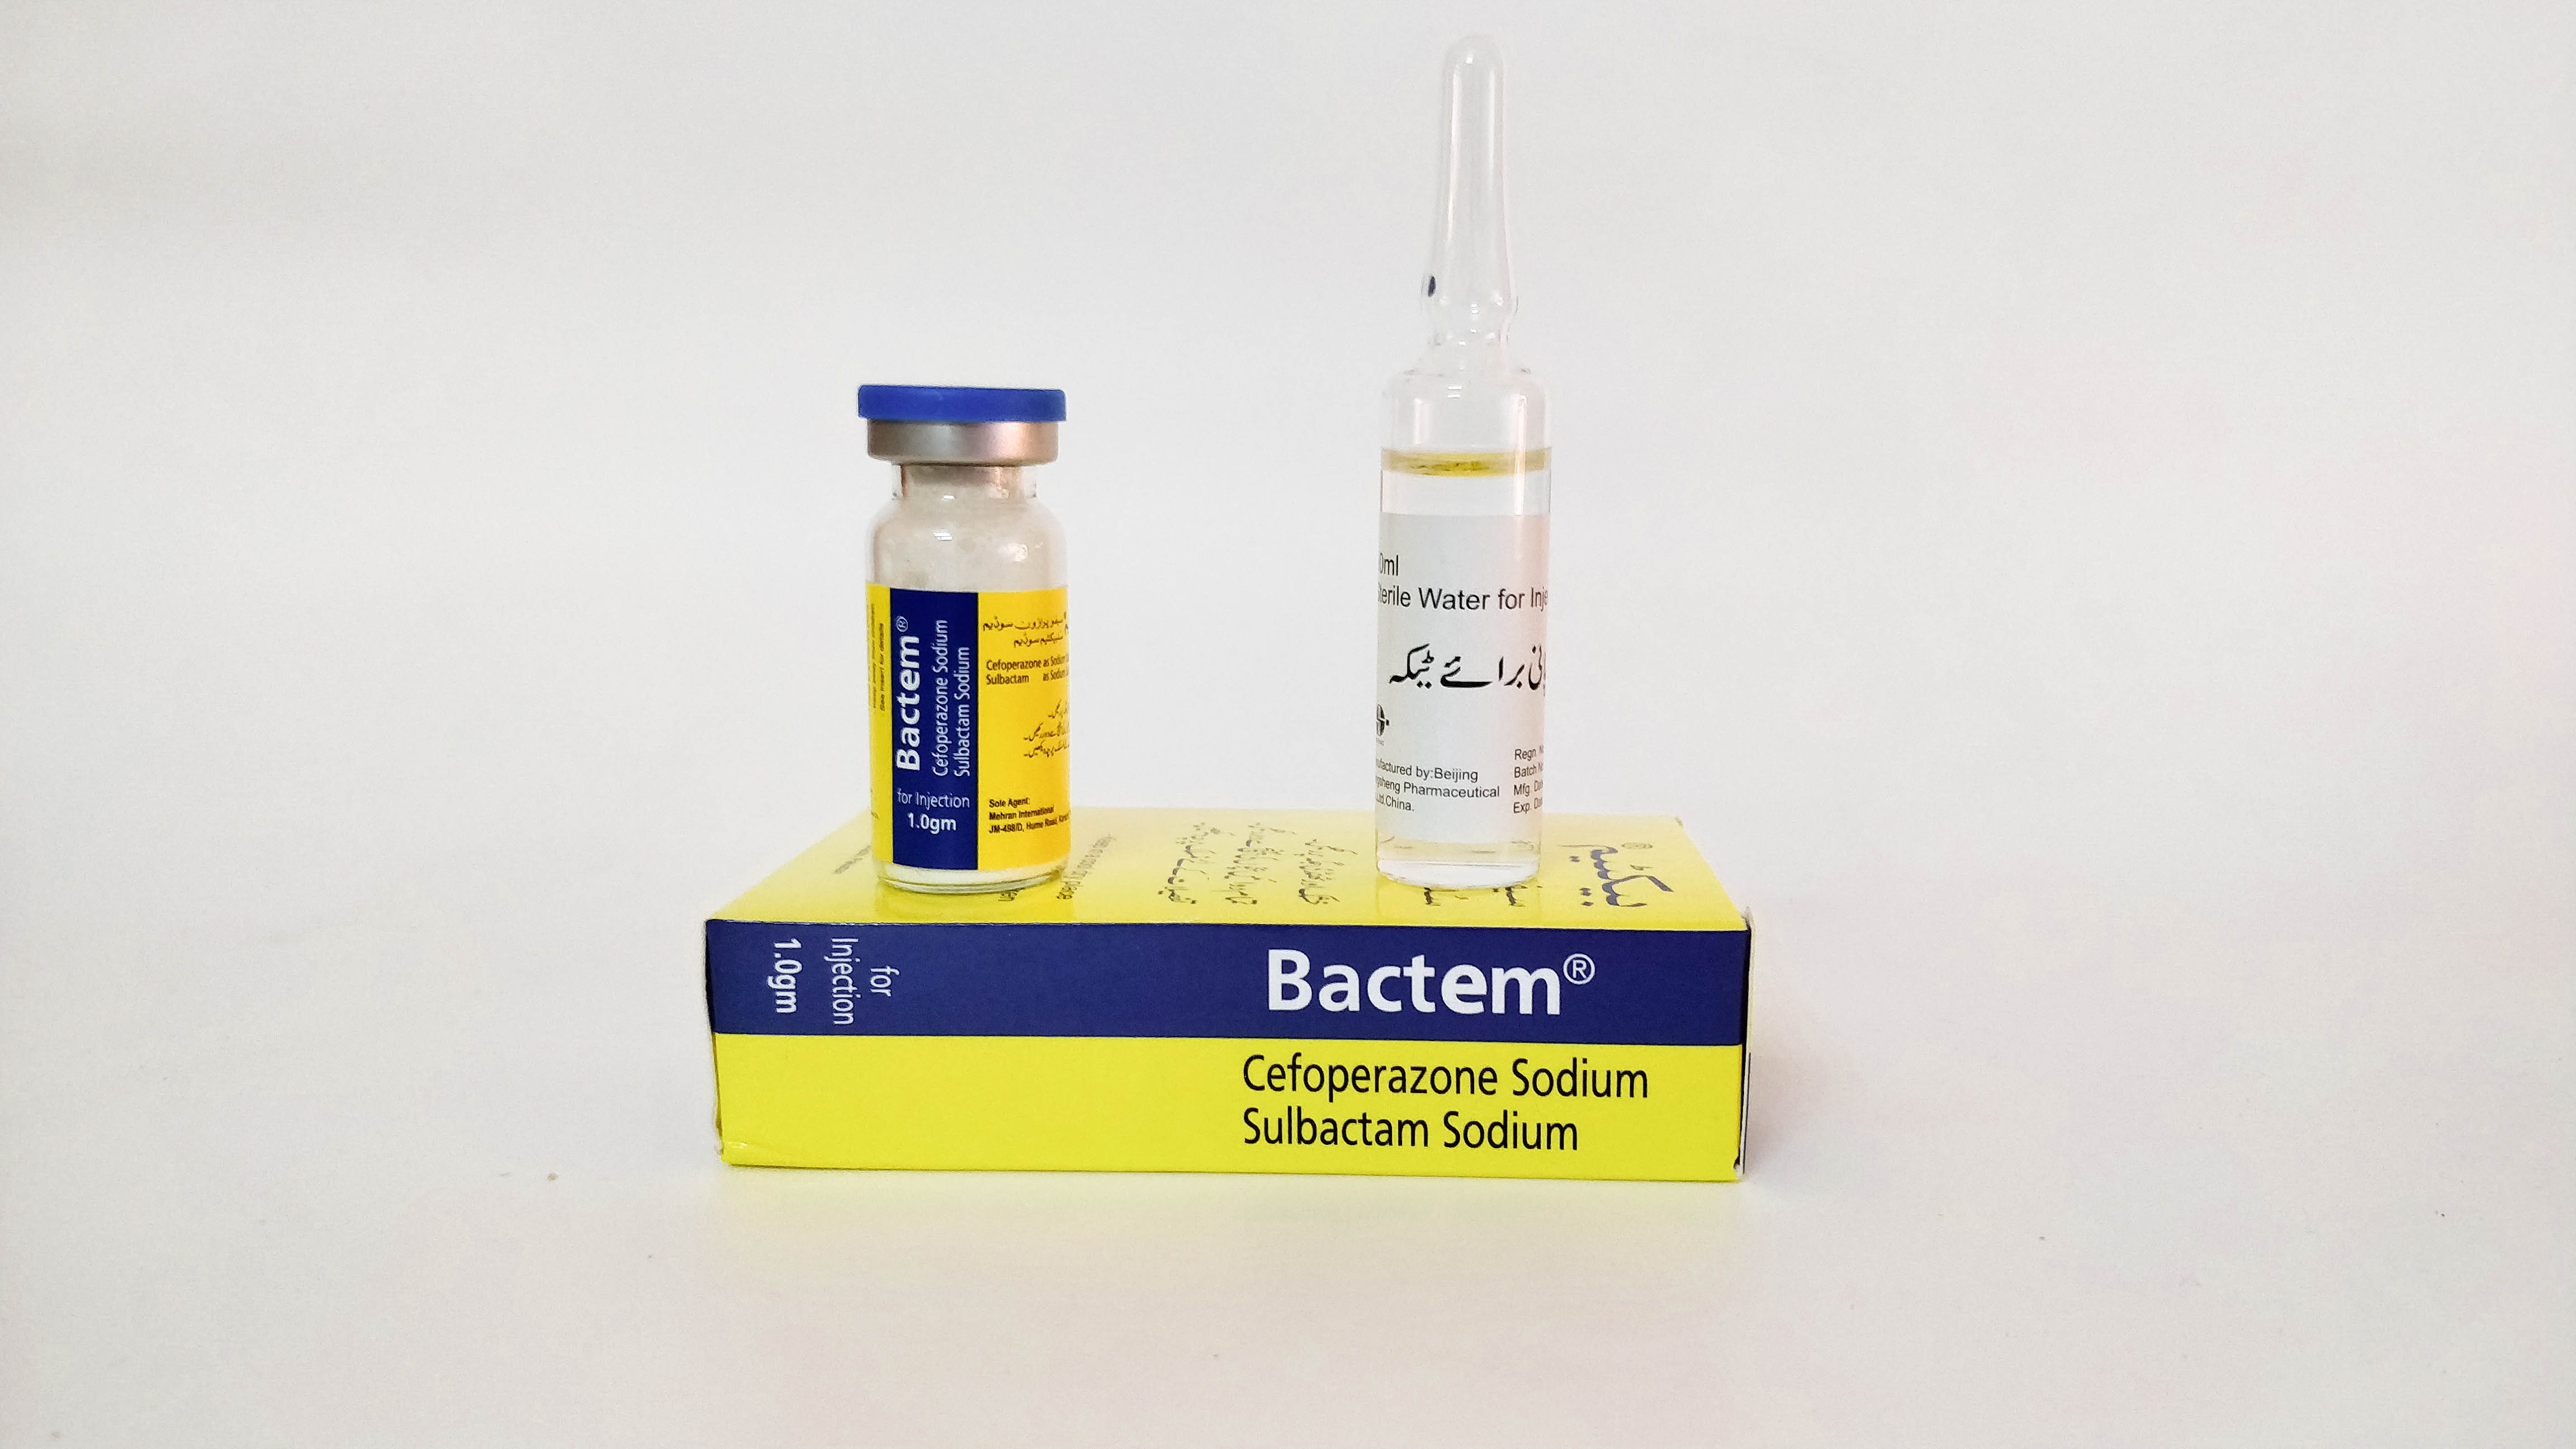 Bactem Injection 1gram